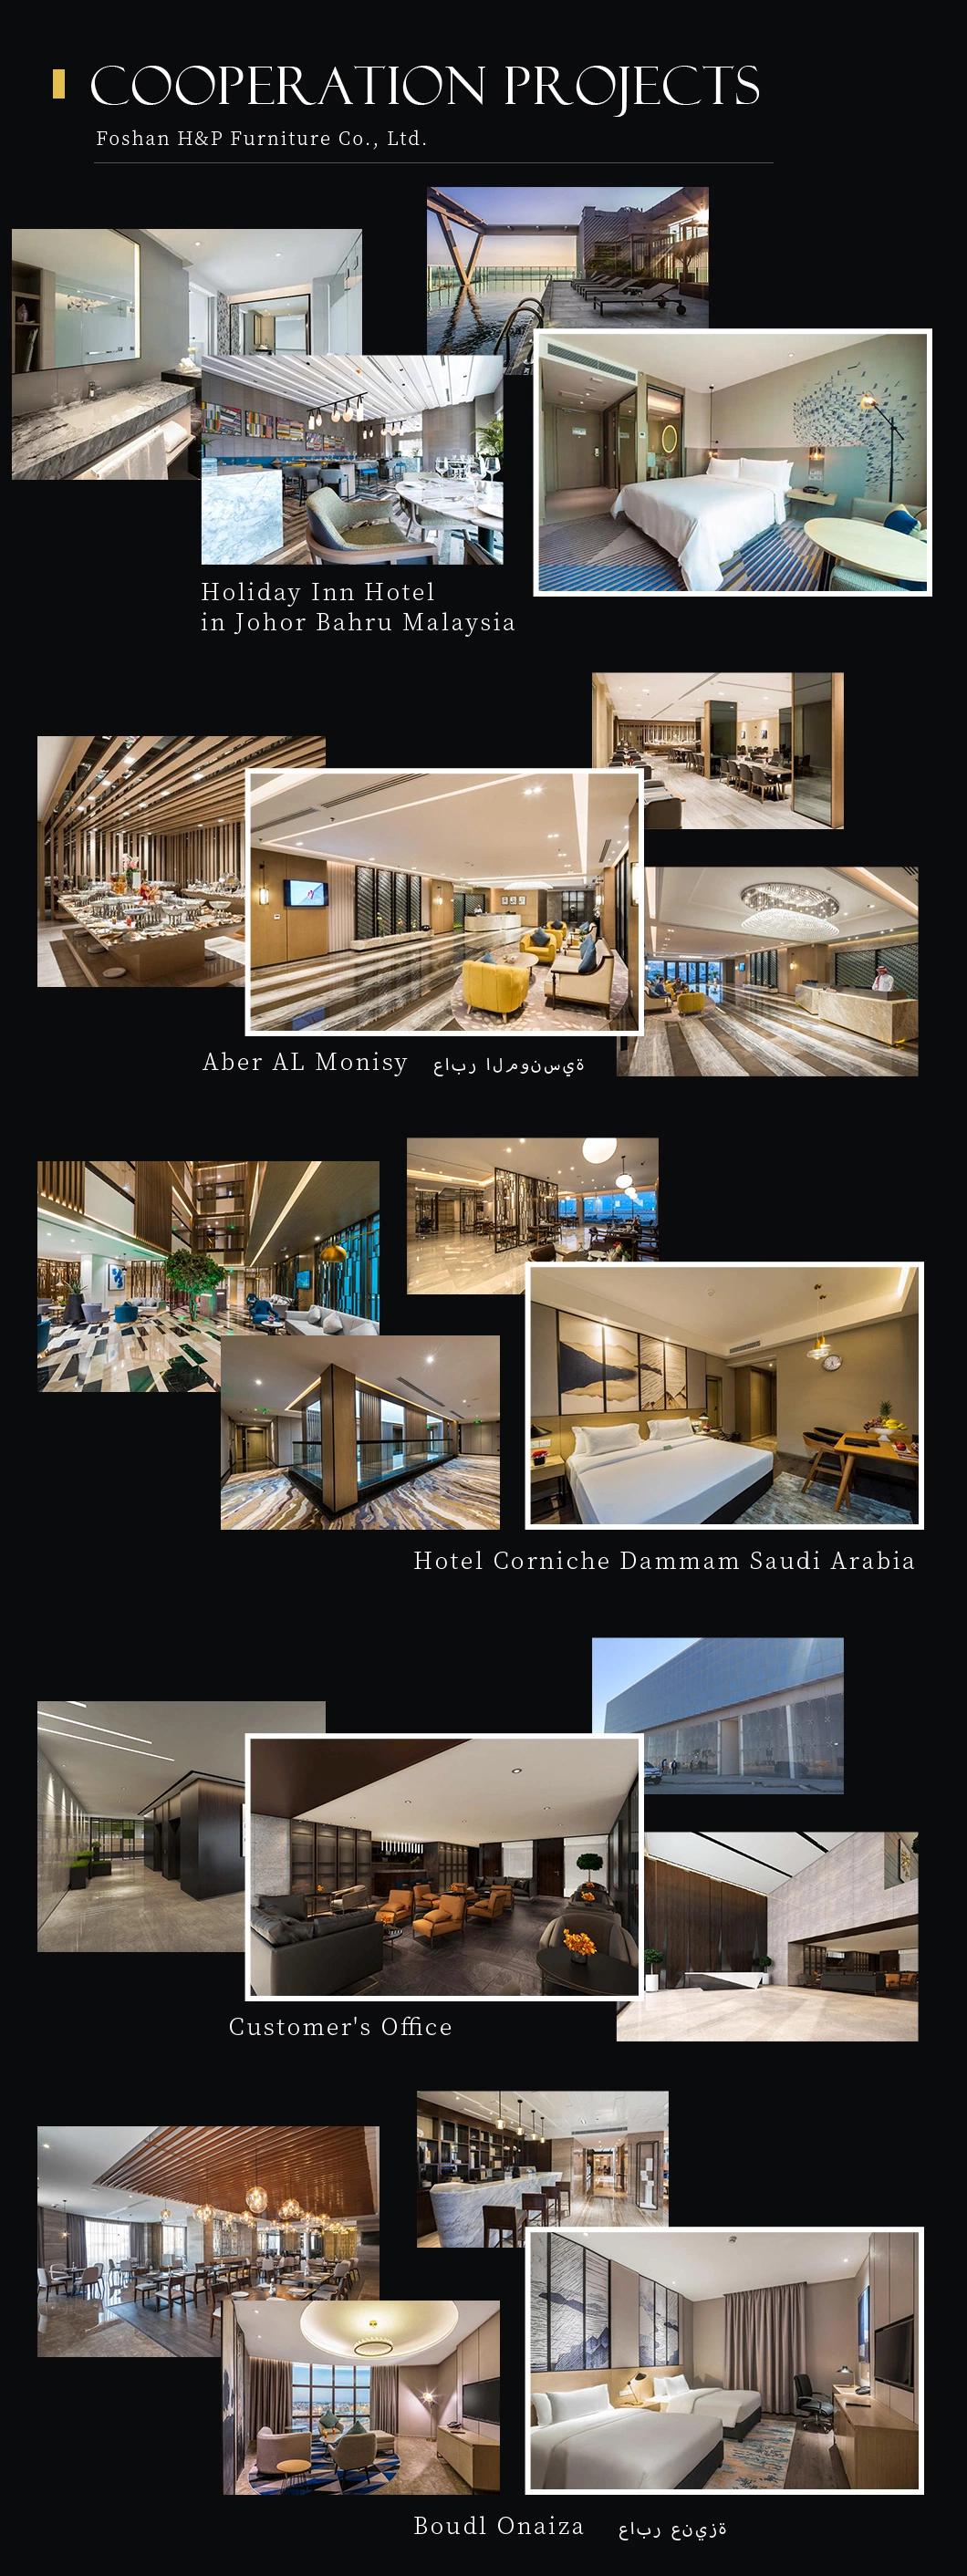 5 Star Modern Holiday Inn Express Headboard Bedroom Sets Hospitality Hotel King Size Furniture